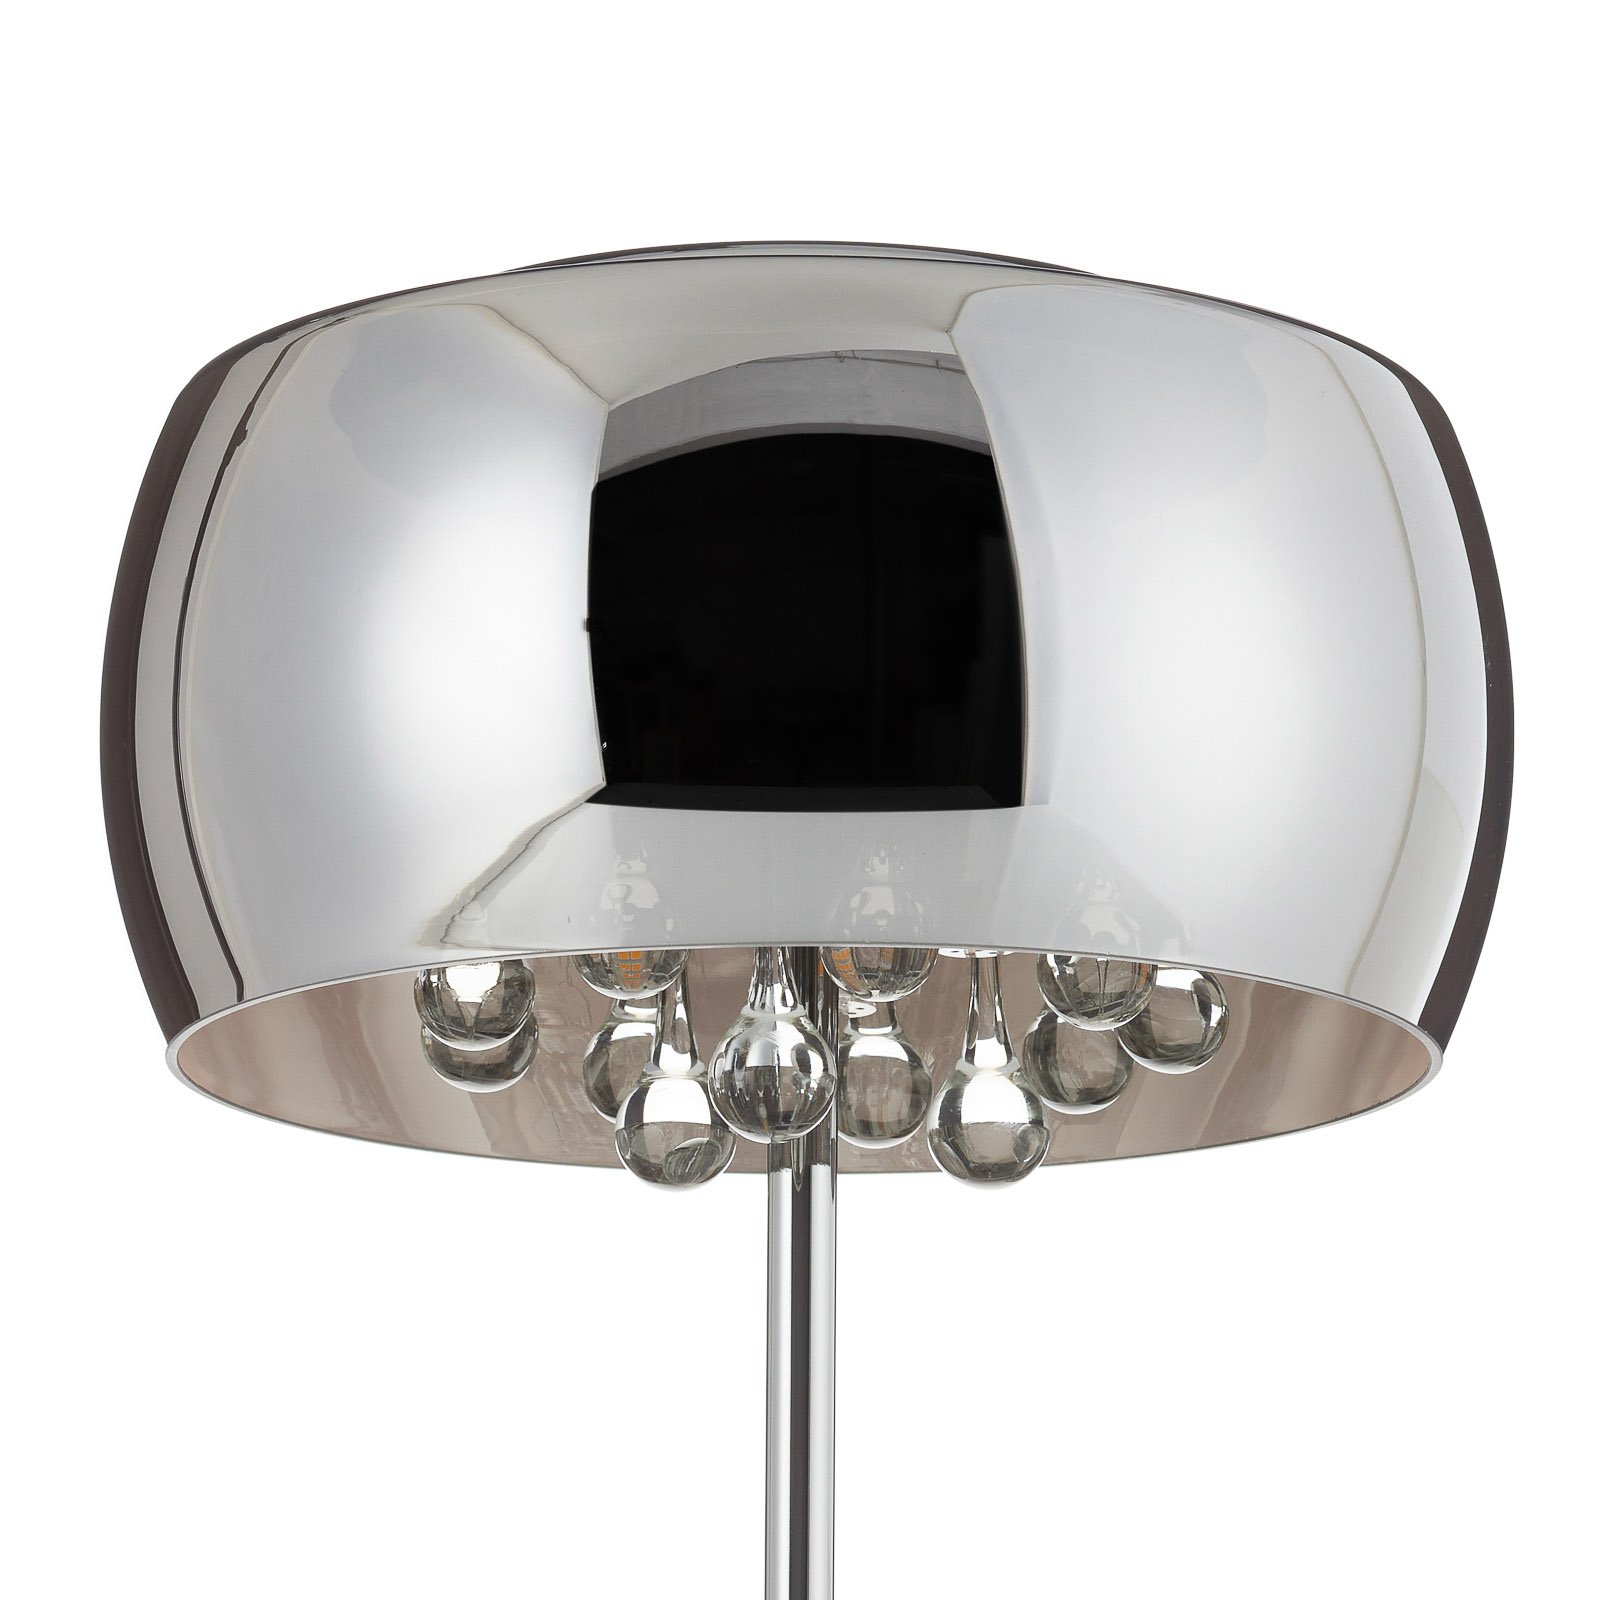 Argos LED Table Lamp Lightscouk